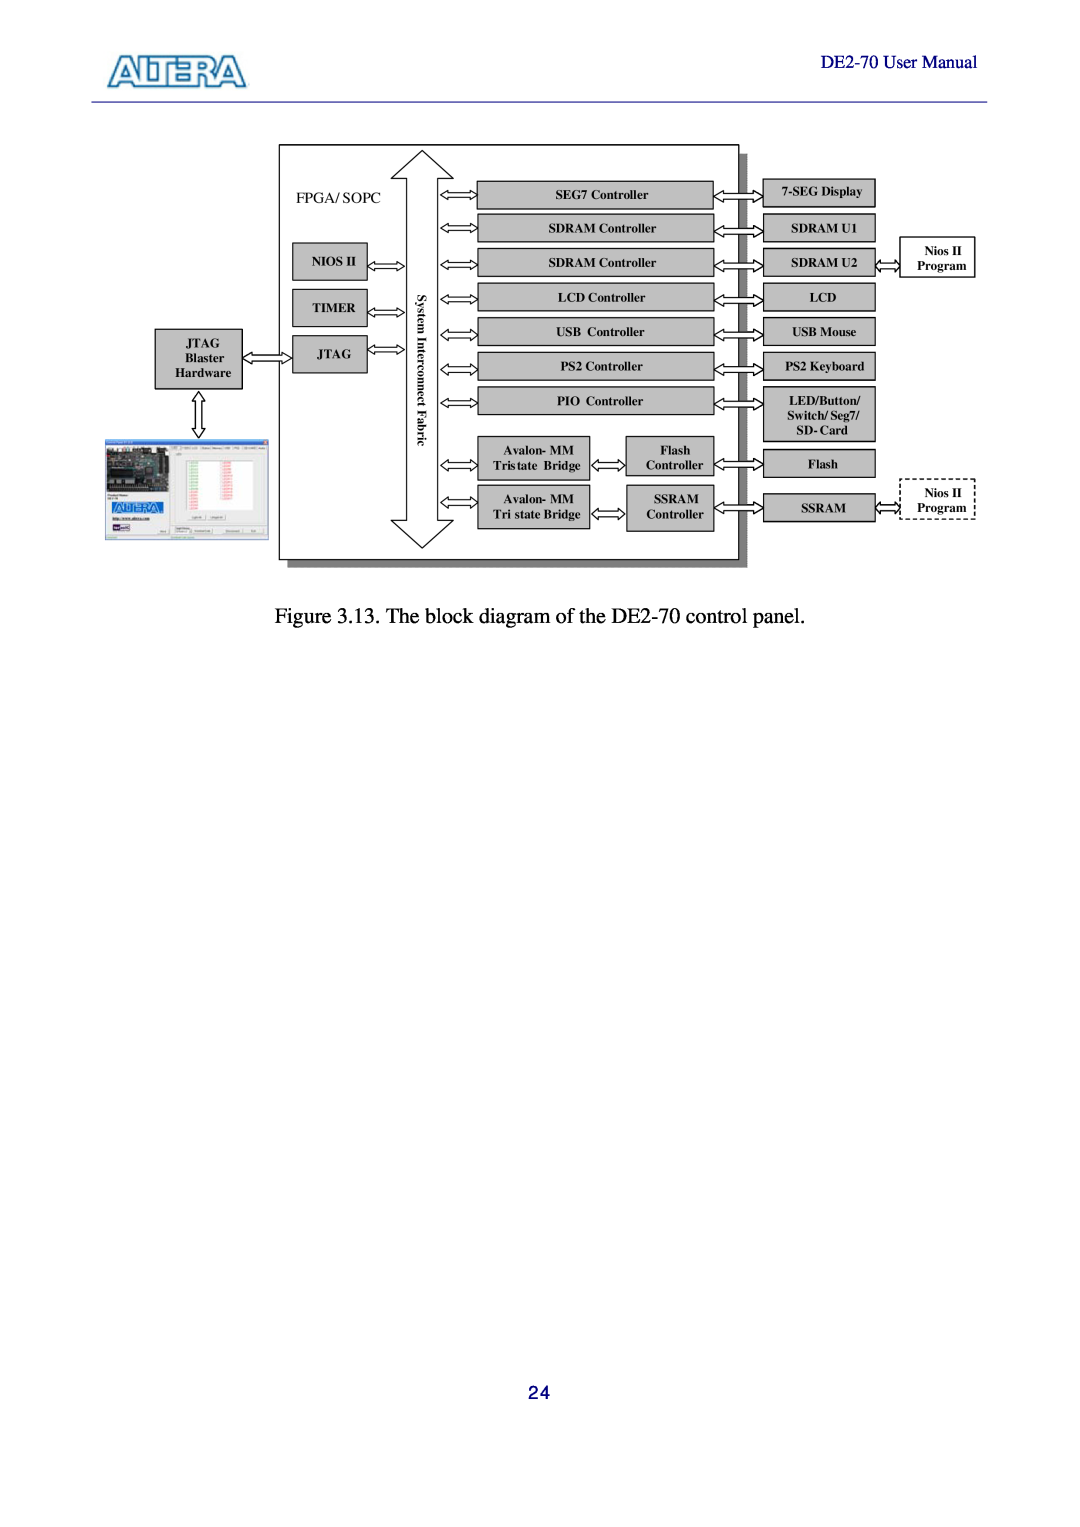 Sigma manual 13. The block diagram of the DE2-70 control panel, DE2-70 User Manual, Fpga/ Sopc 